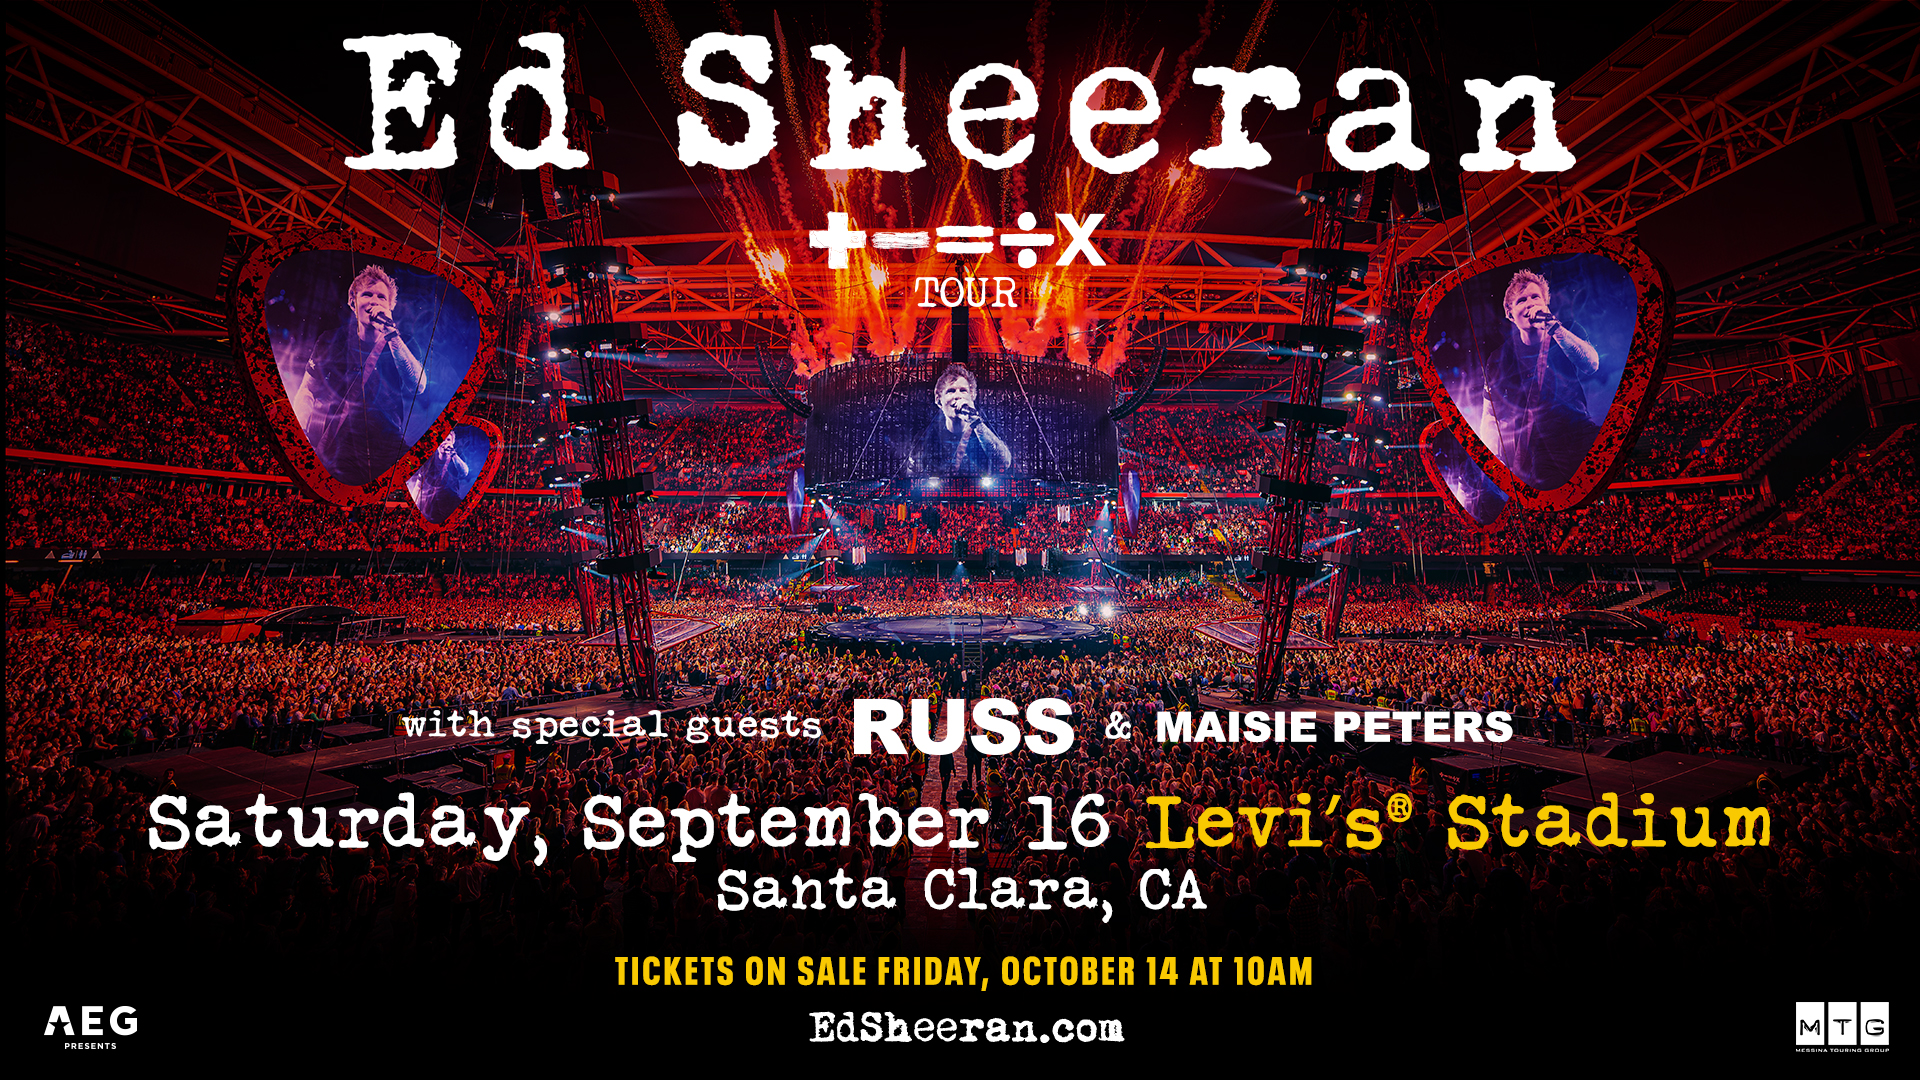 Ed Sheeran | + - = ÷ x Tour - Levi's® Stadium